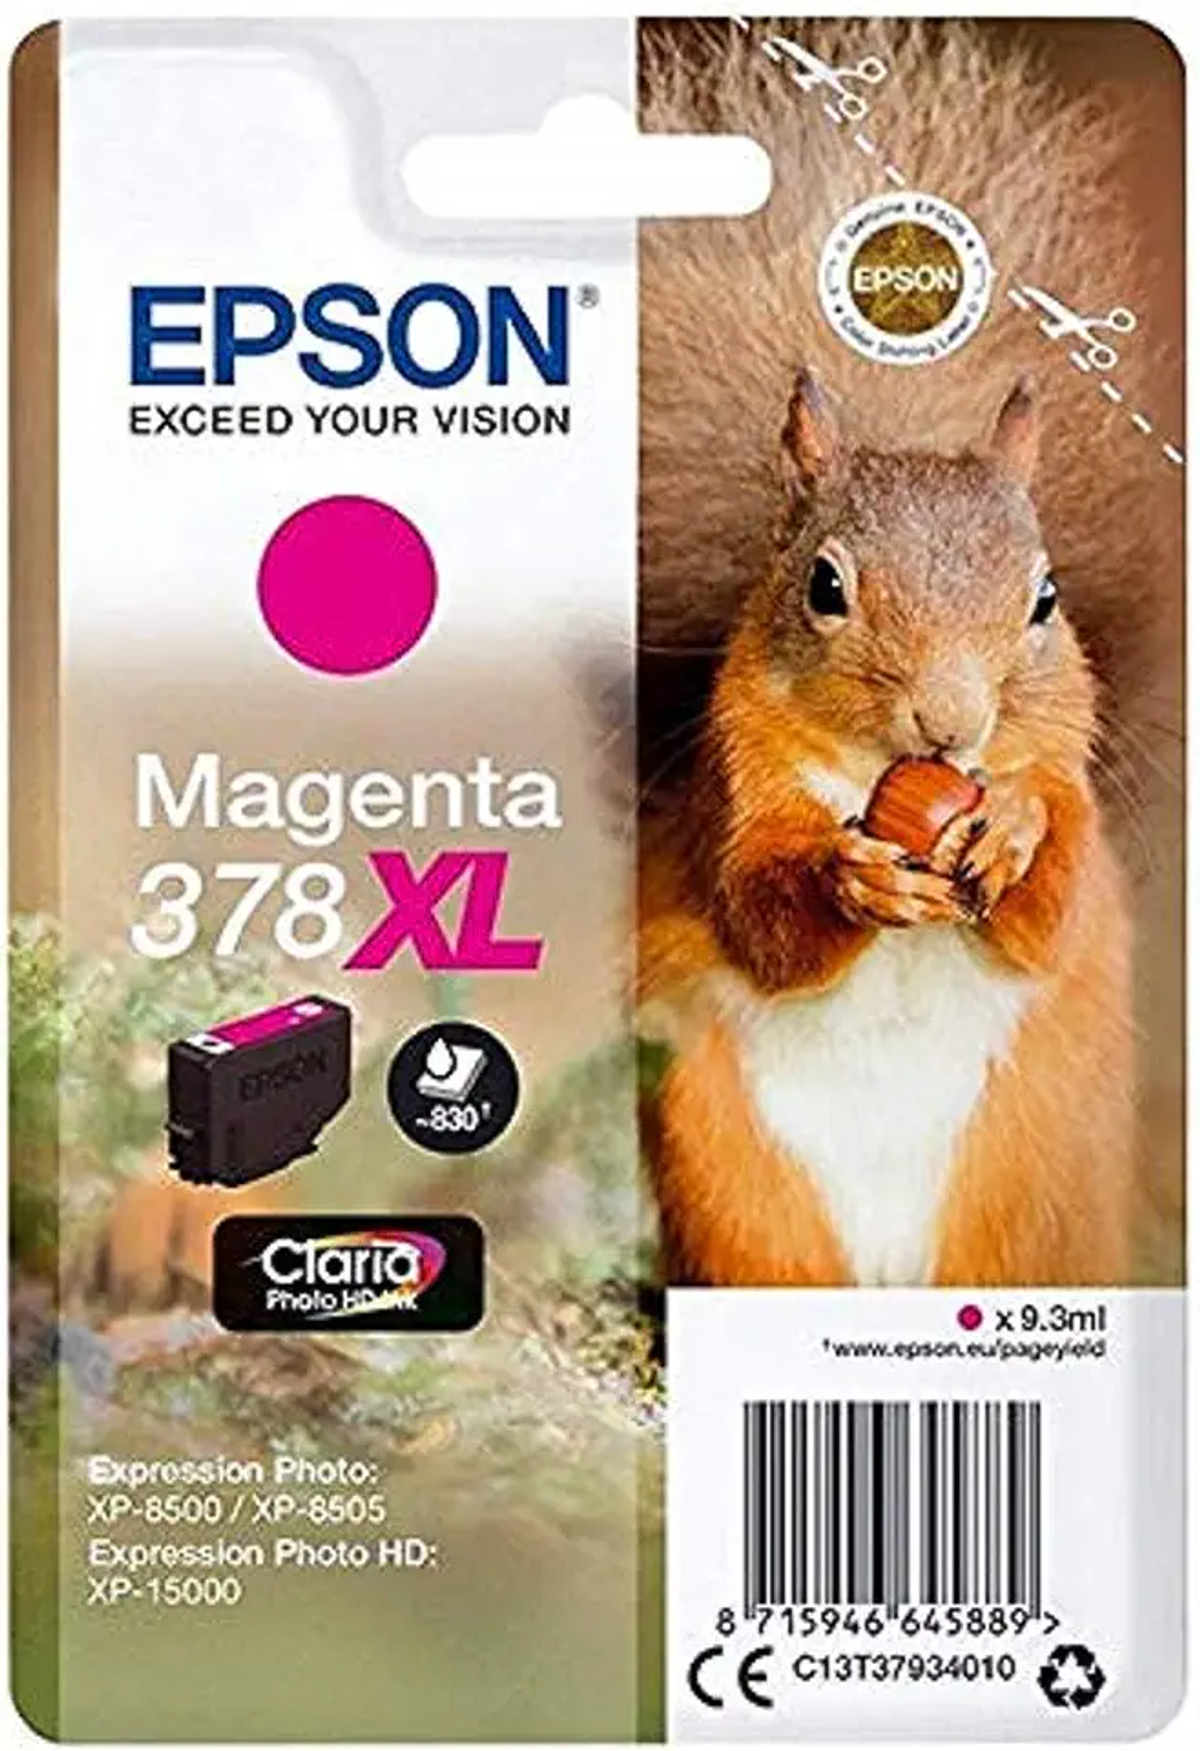 EPSON Tinte magenta (C13T37934010) 378XL